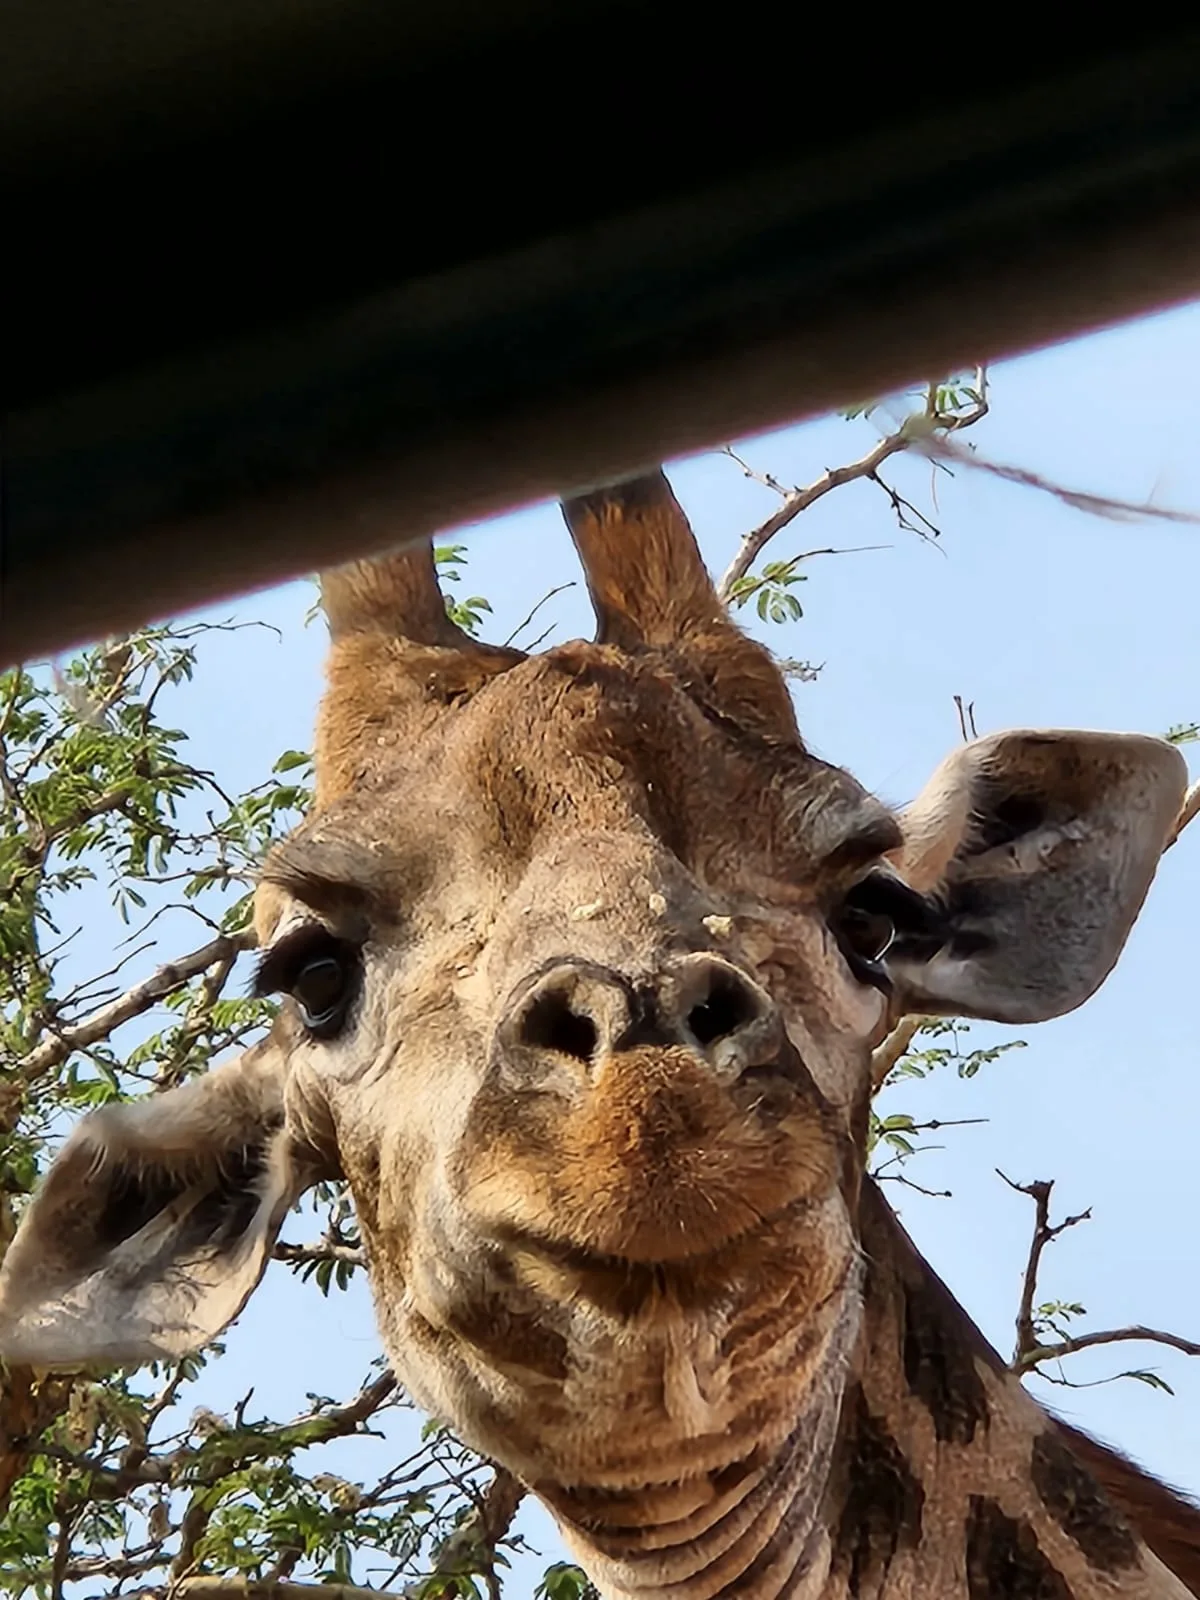 Giraffe looking into safari 4x4 Day 10, South Africa & Victoria Falls Approach Tour